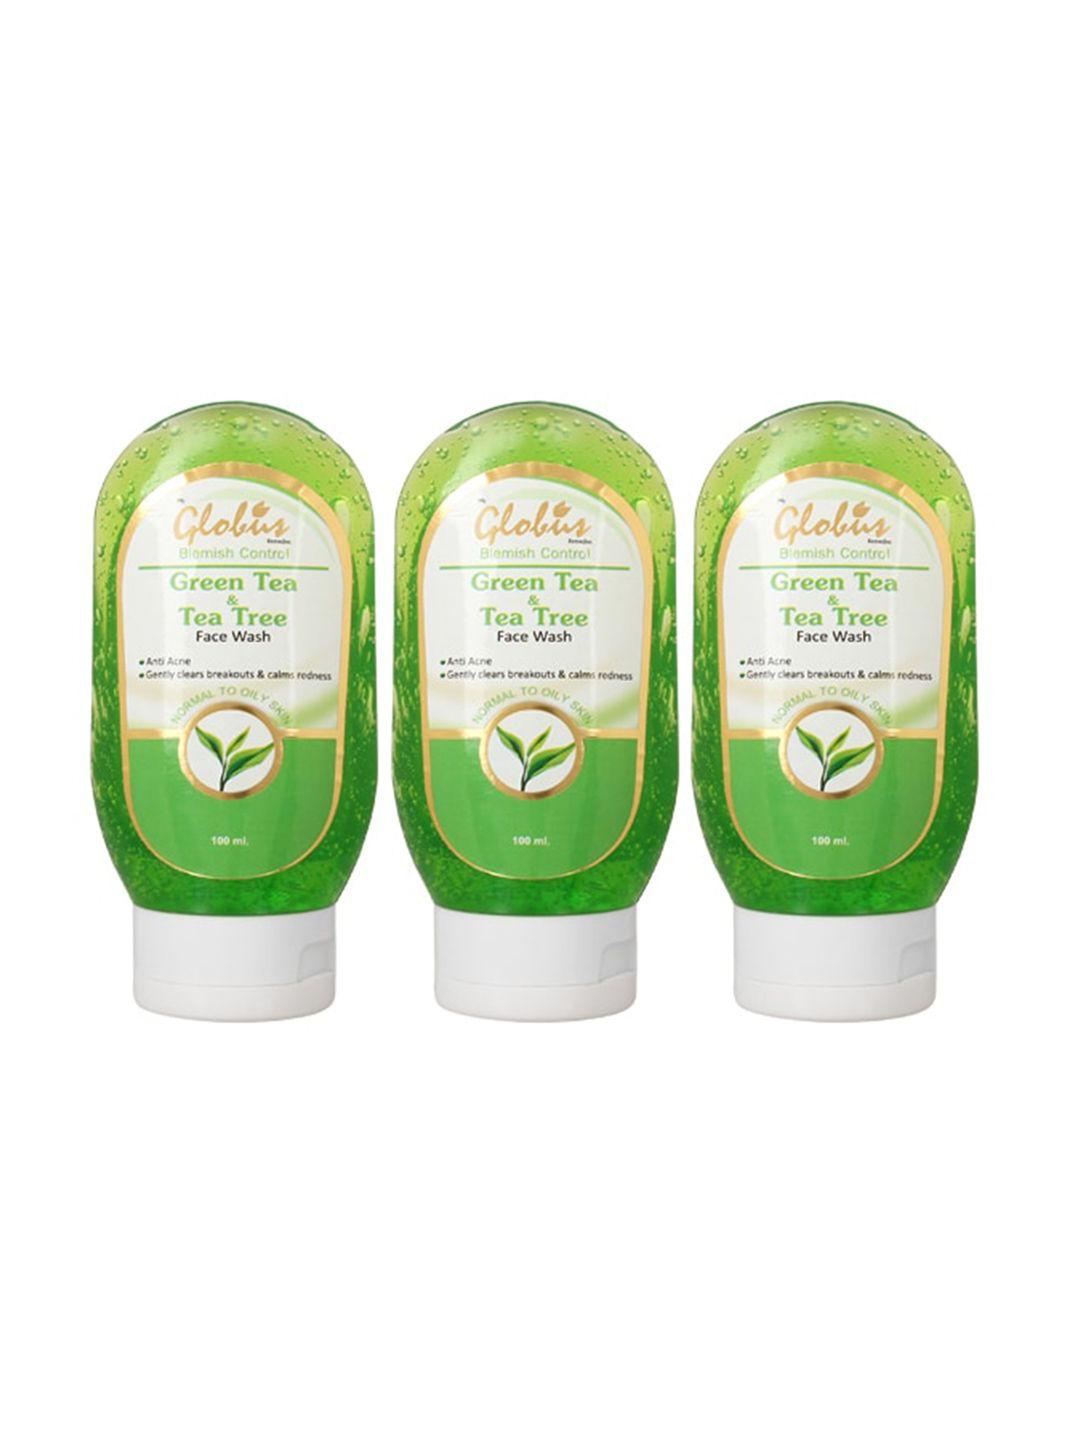 globus remedies set of 3 green tea & tea tree anti-acne face wash - 100ml each